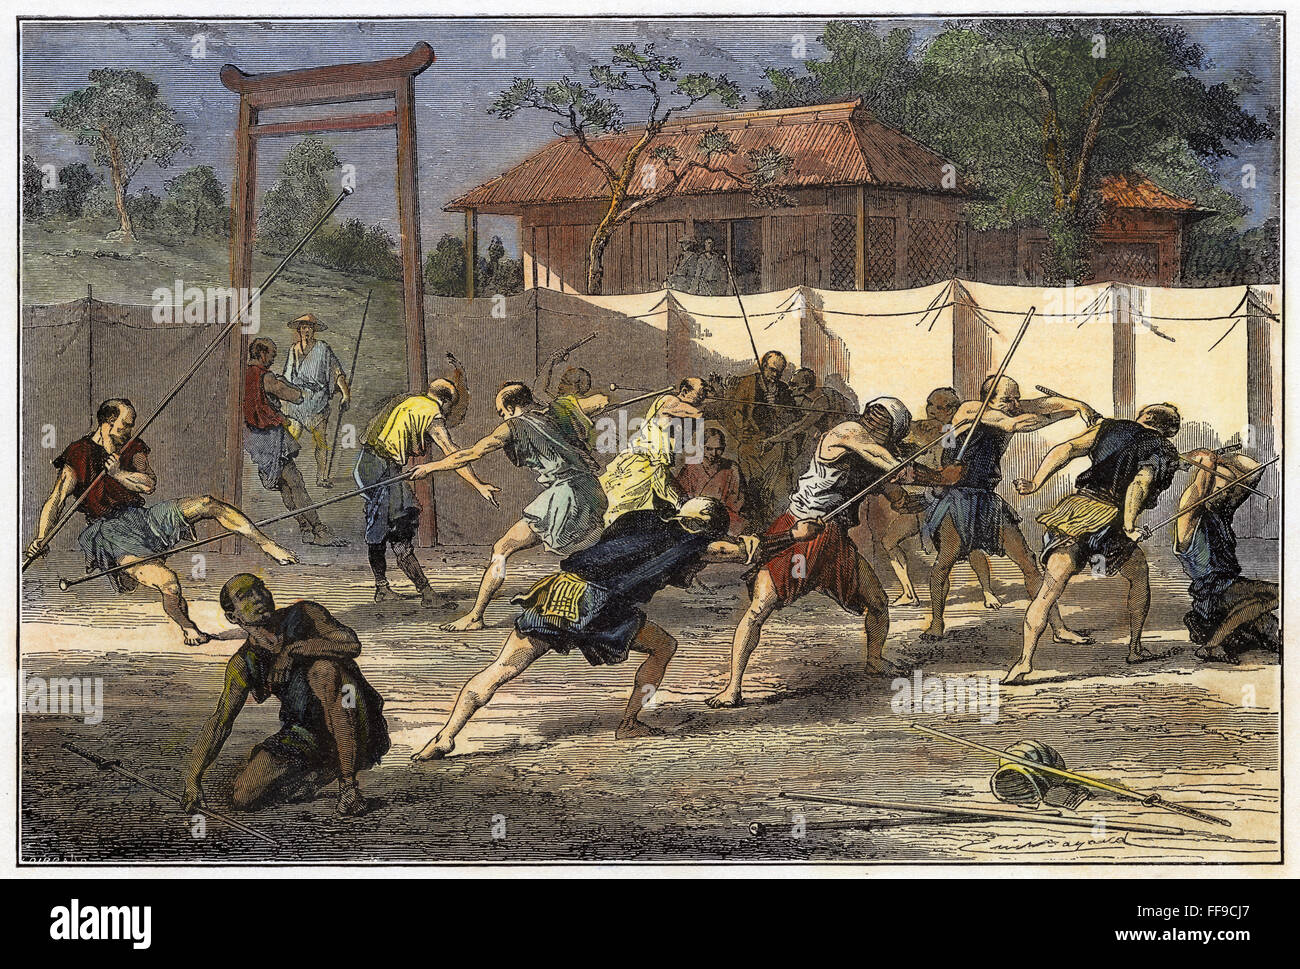 SAMURAI TRAINING, c1900. /nYoung Samurai in Japan training for the Satsuma Rebellion of 1877. Wood engraving, American, c1900. Stock Photo